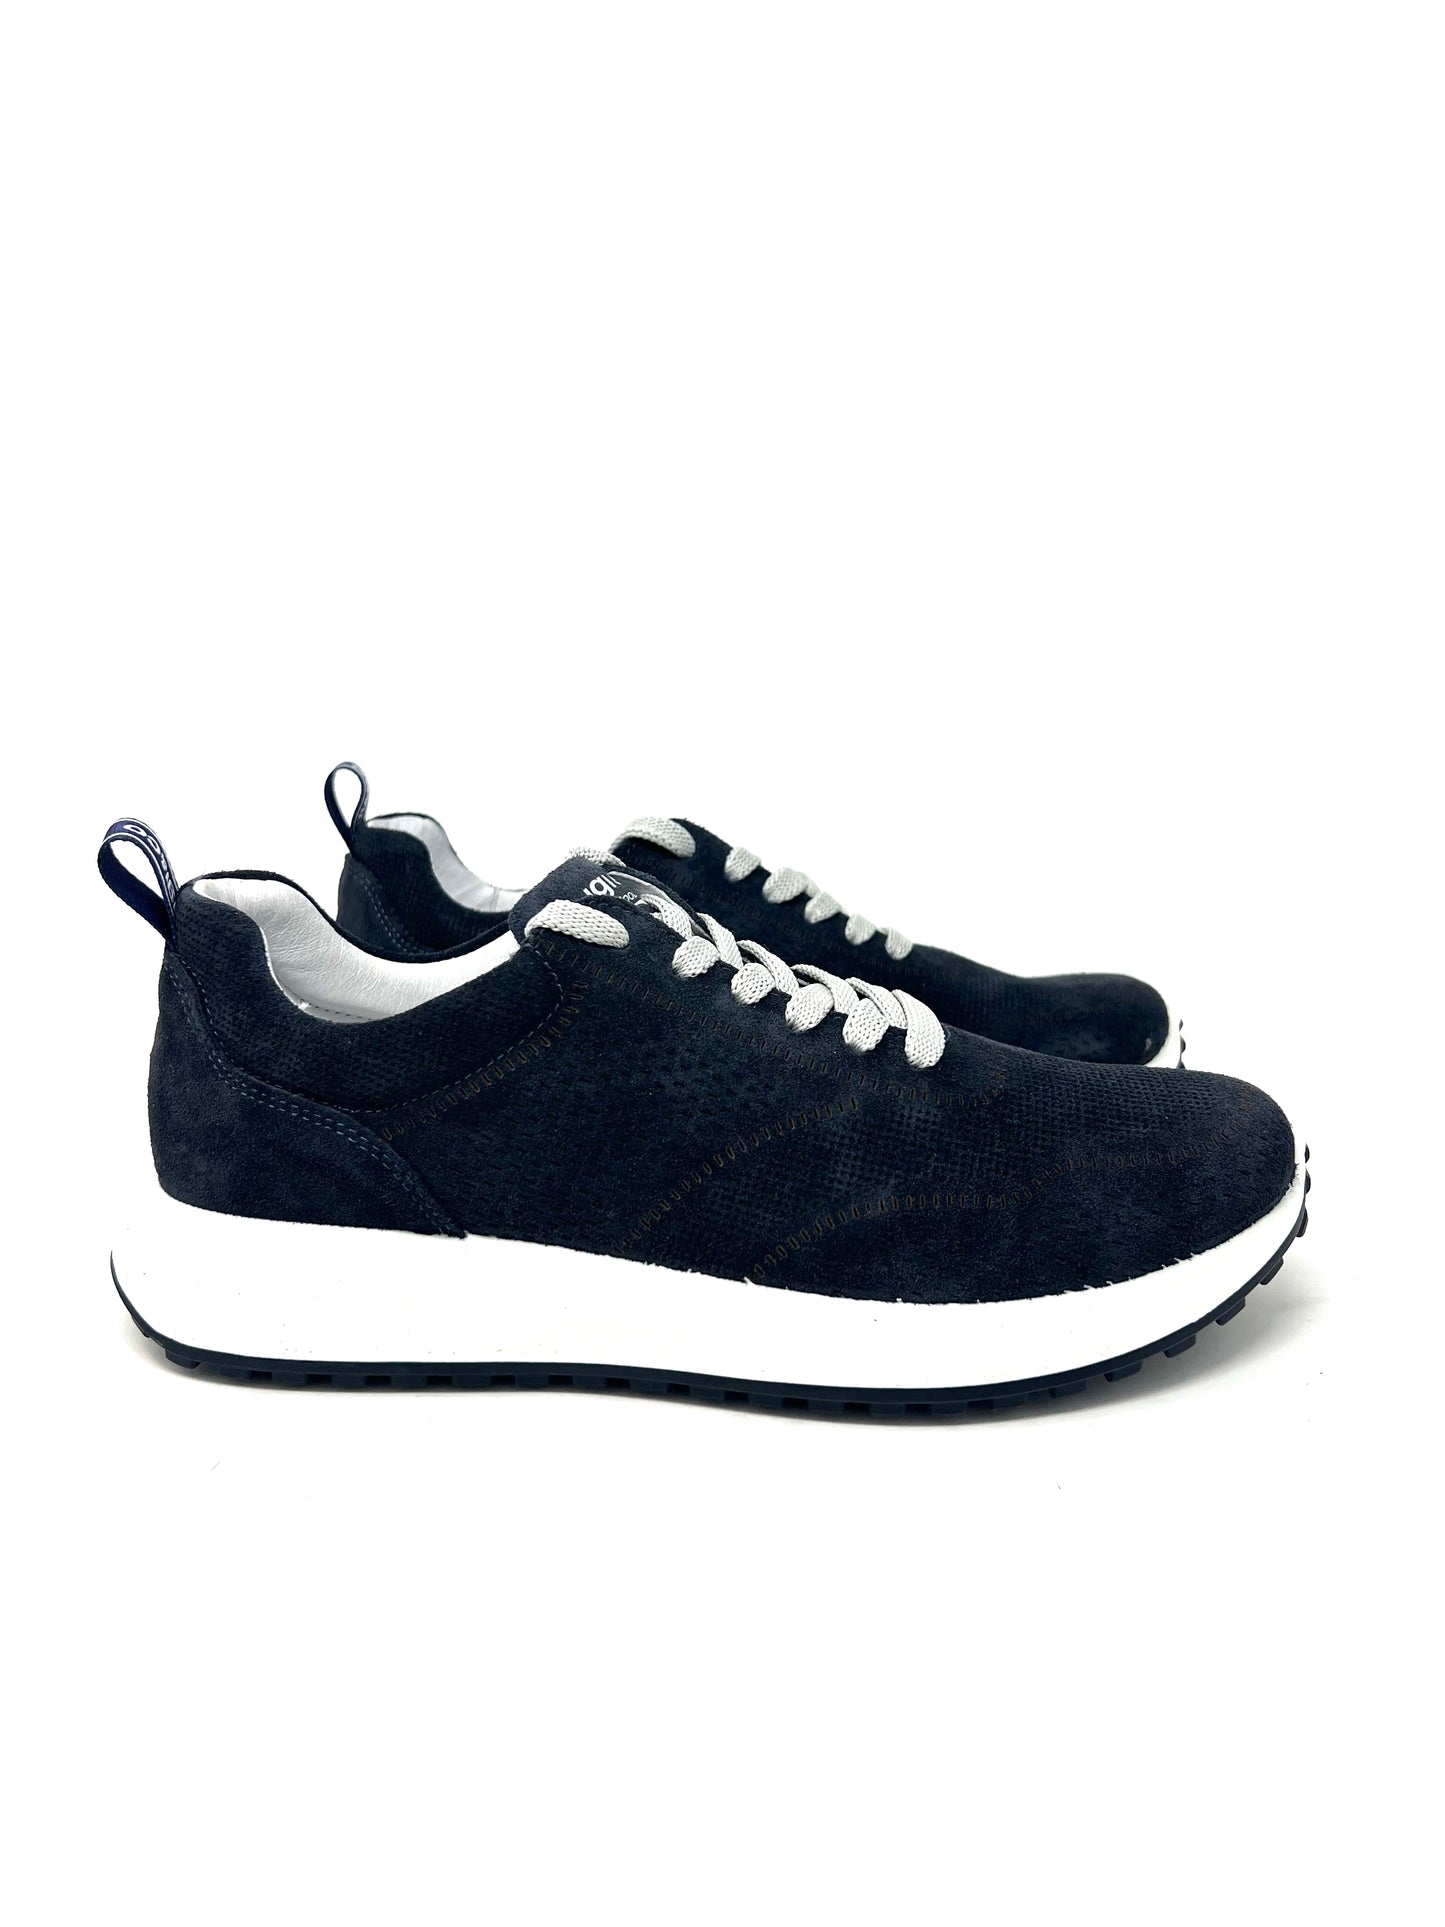 Sneakers Saronno scamosciata special blu Igi e co - 5635611